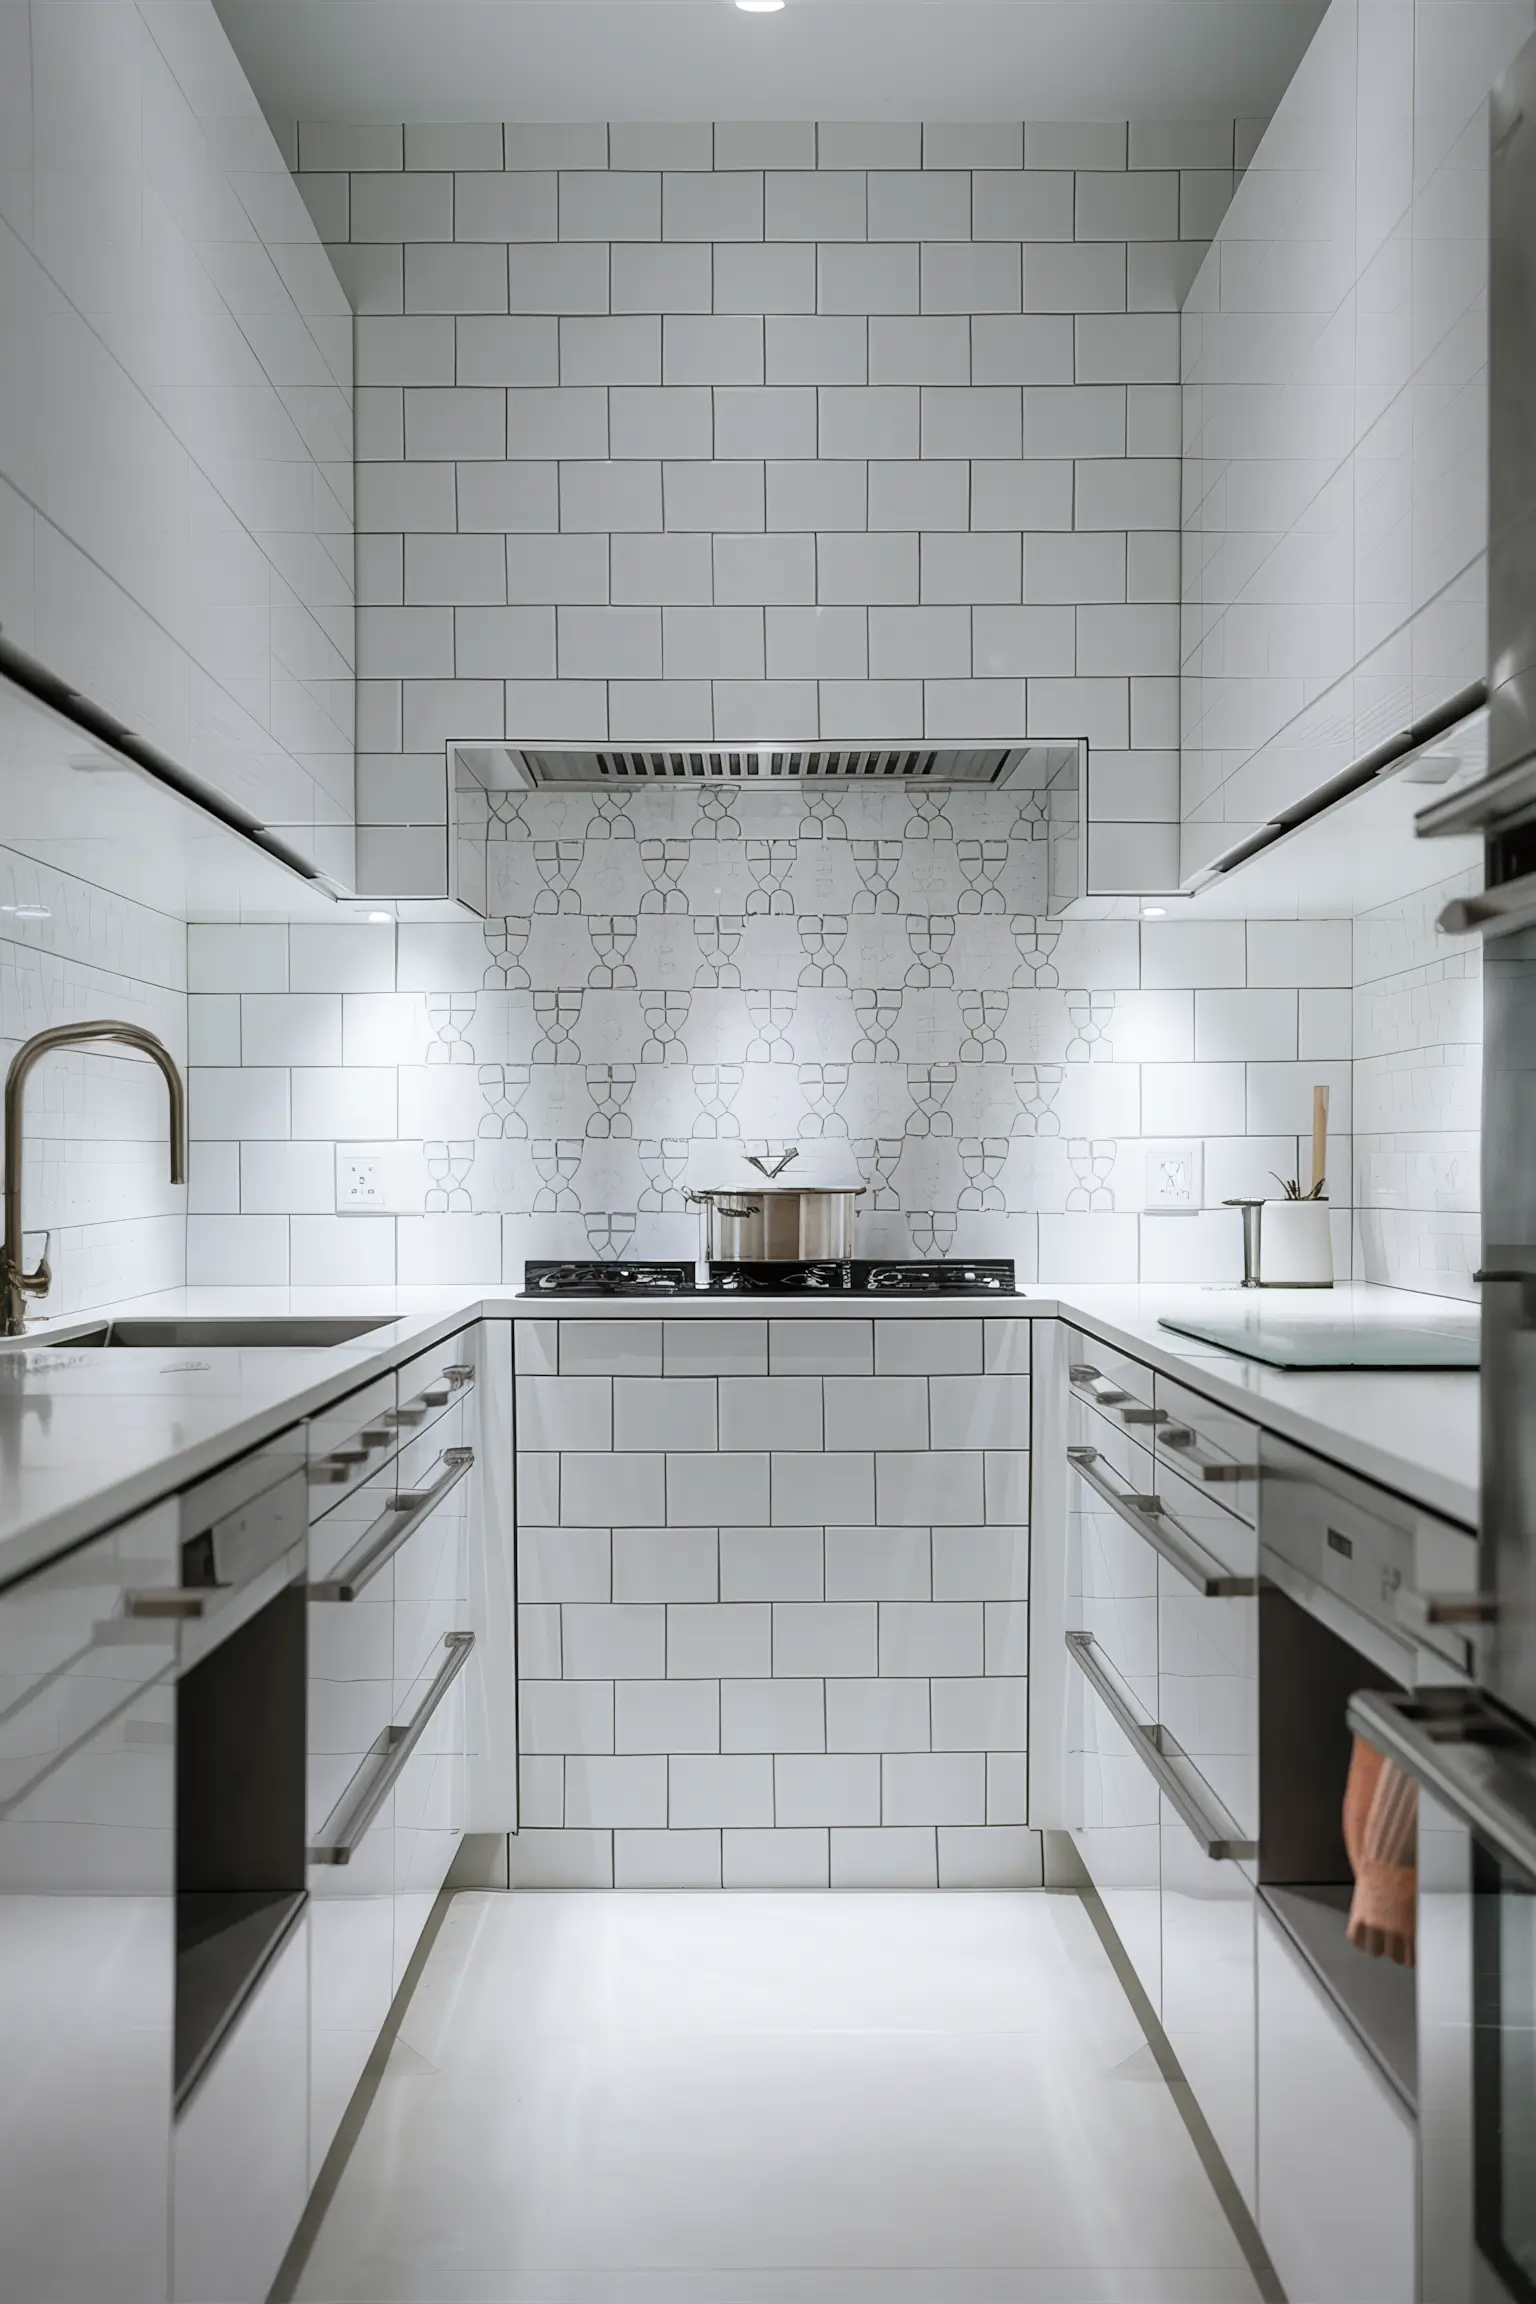 Minimalistic white kitchen with a chic white subway tile backsplash.